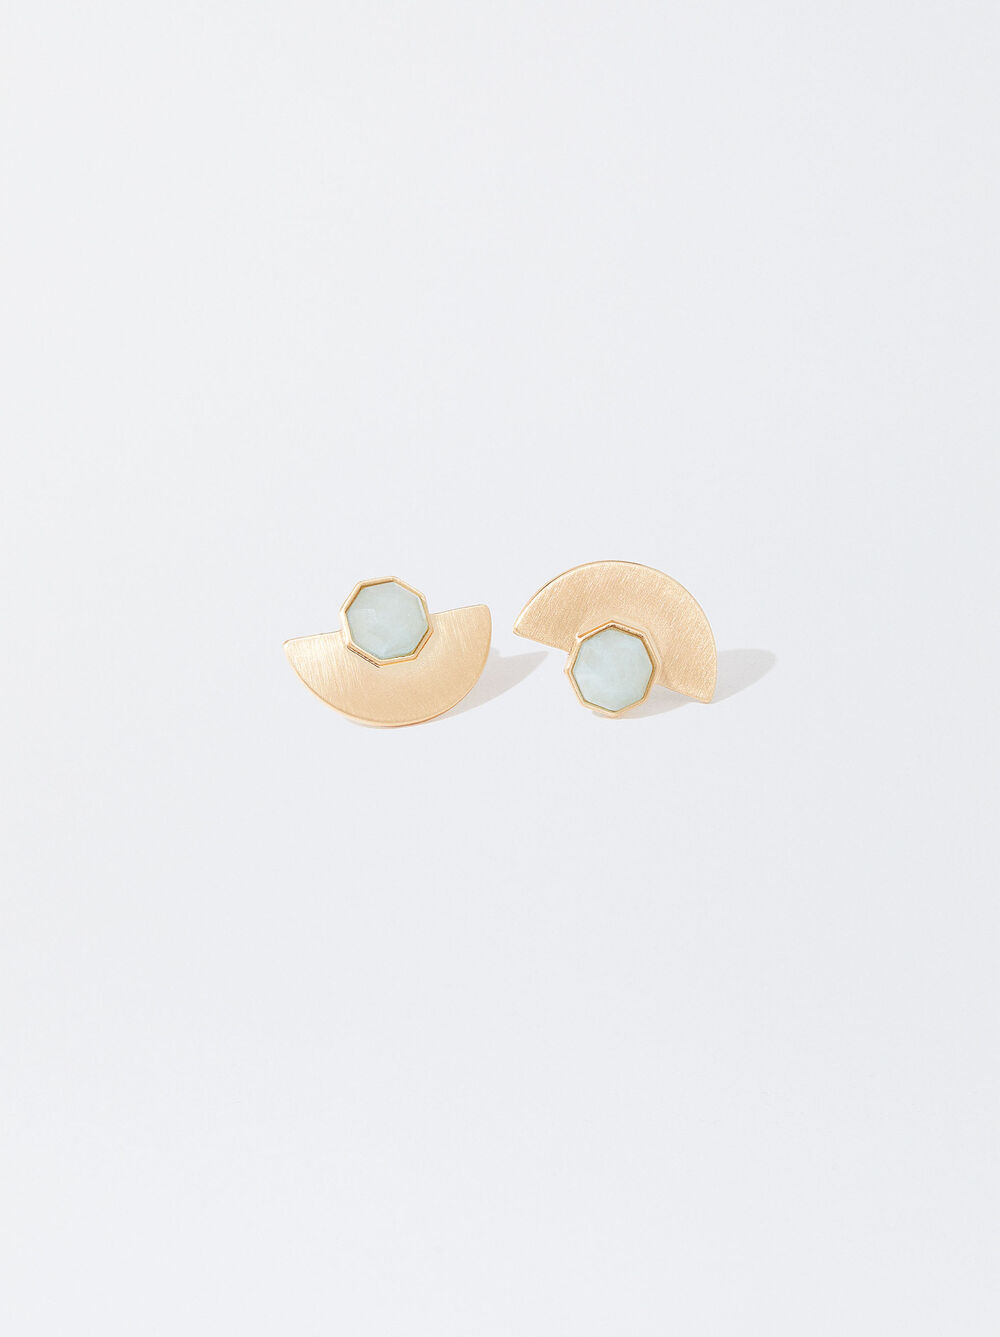 Golden Earrings With Resin